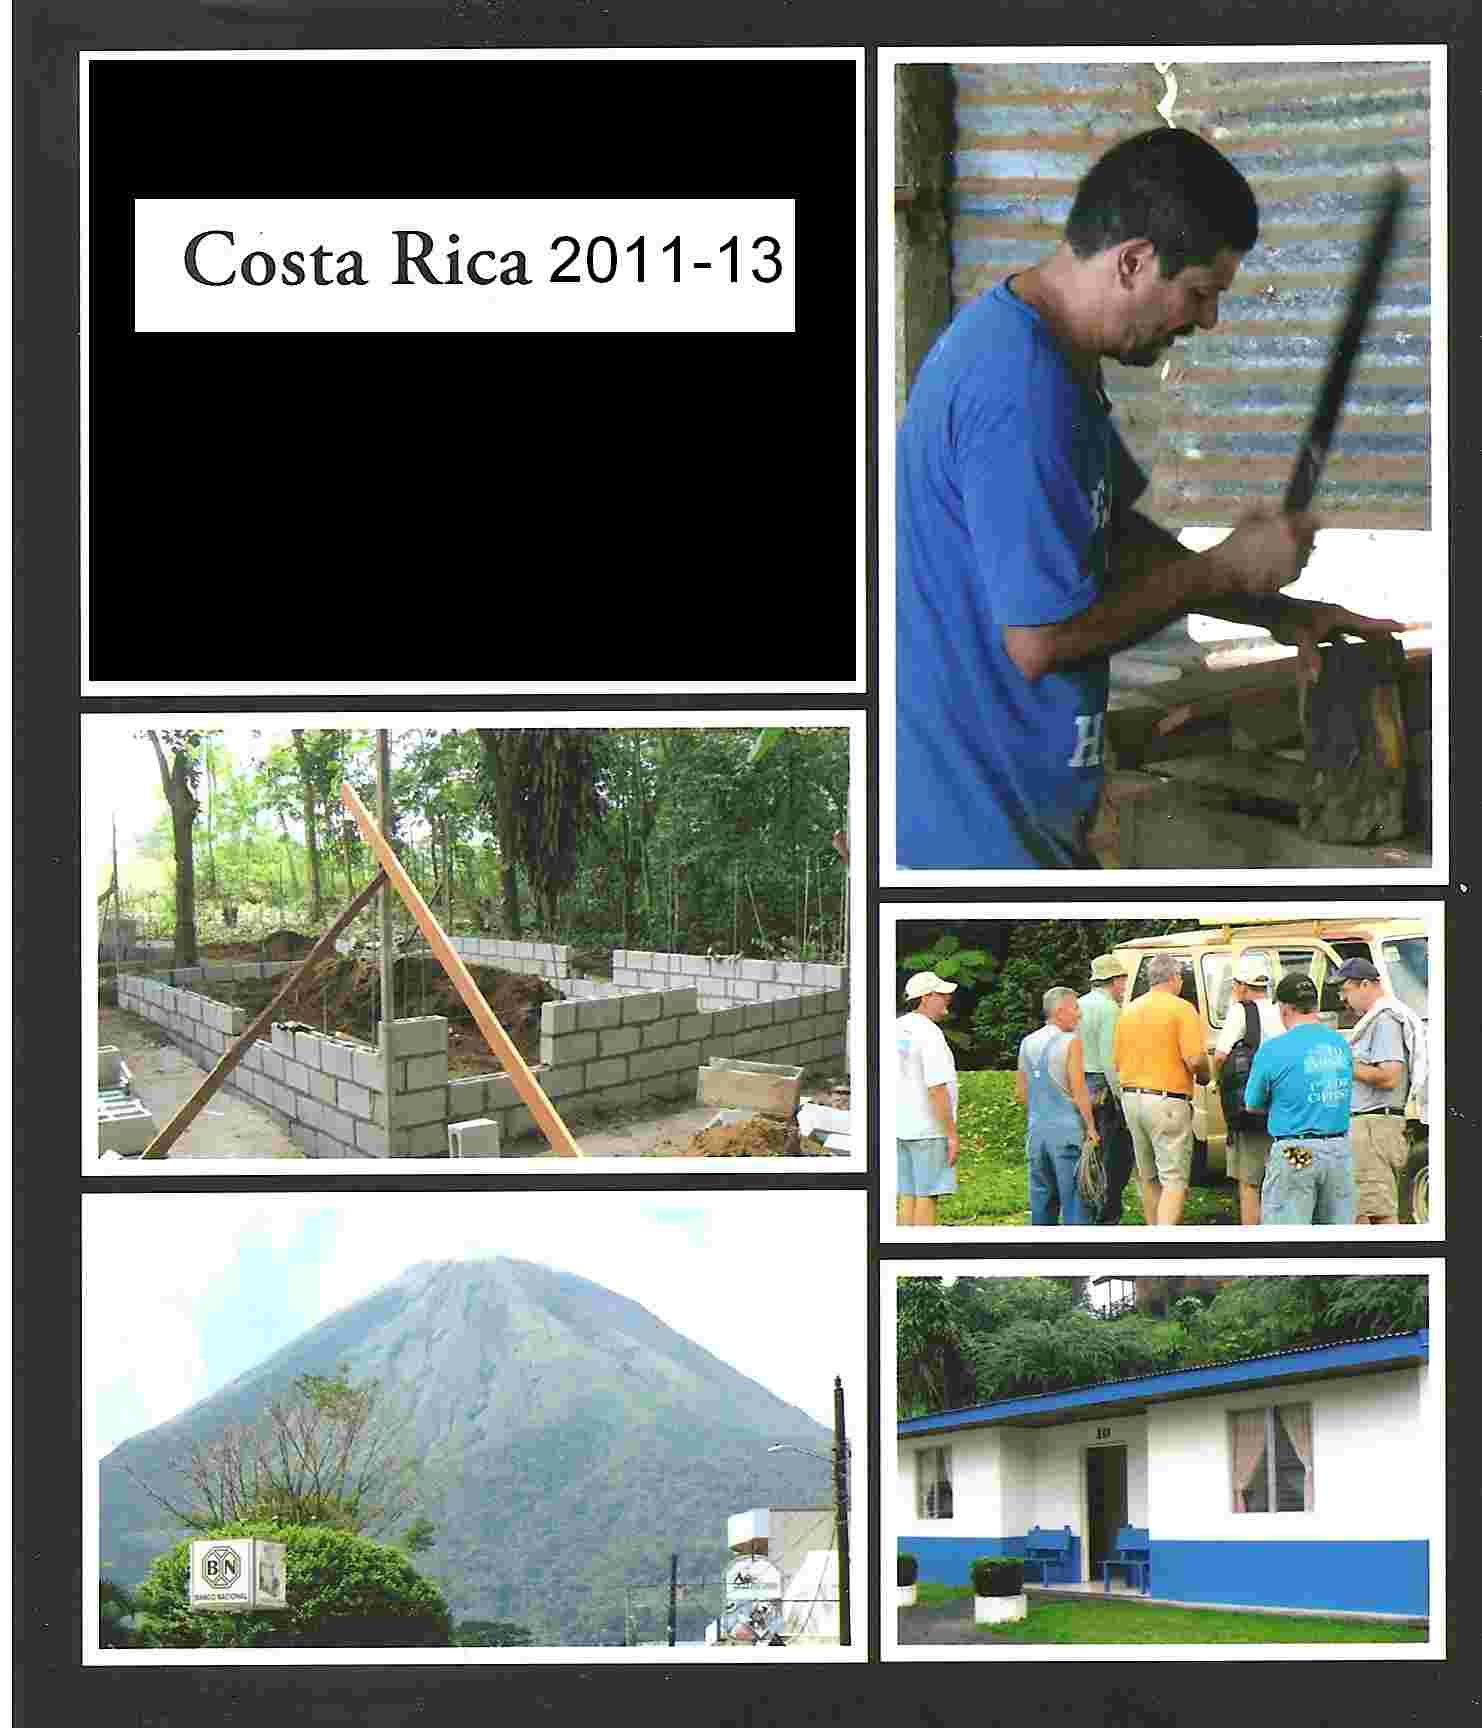 missions in Costa Rica